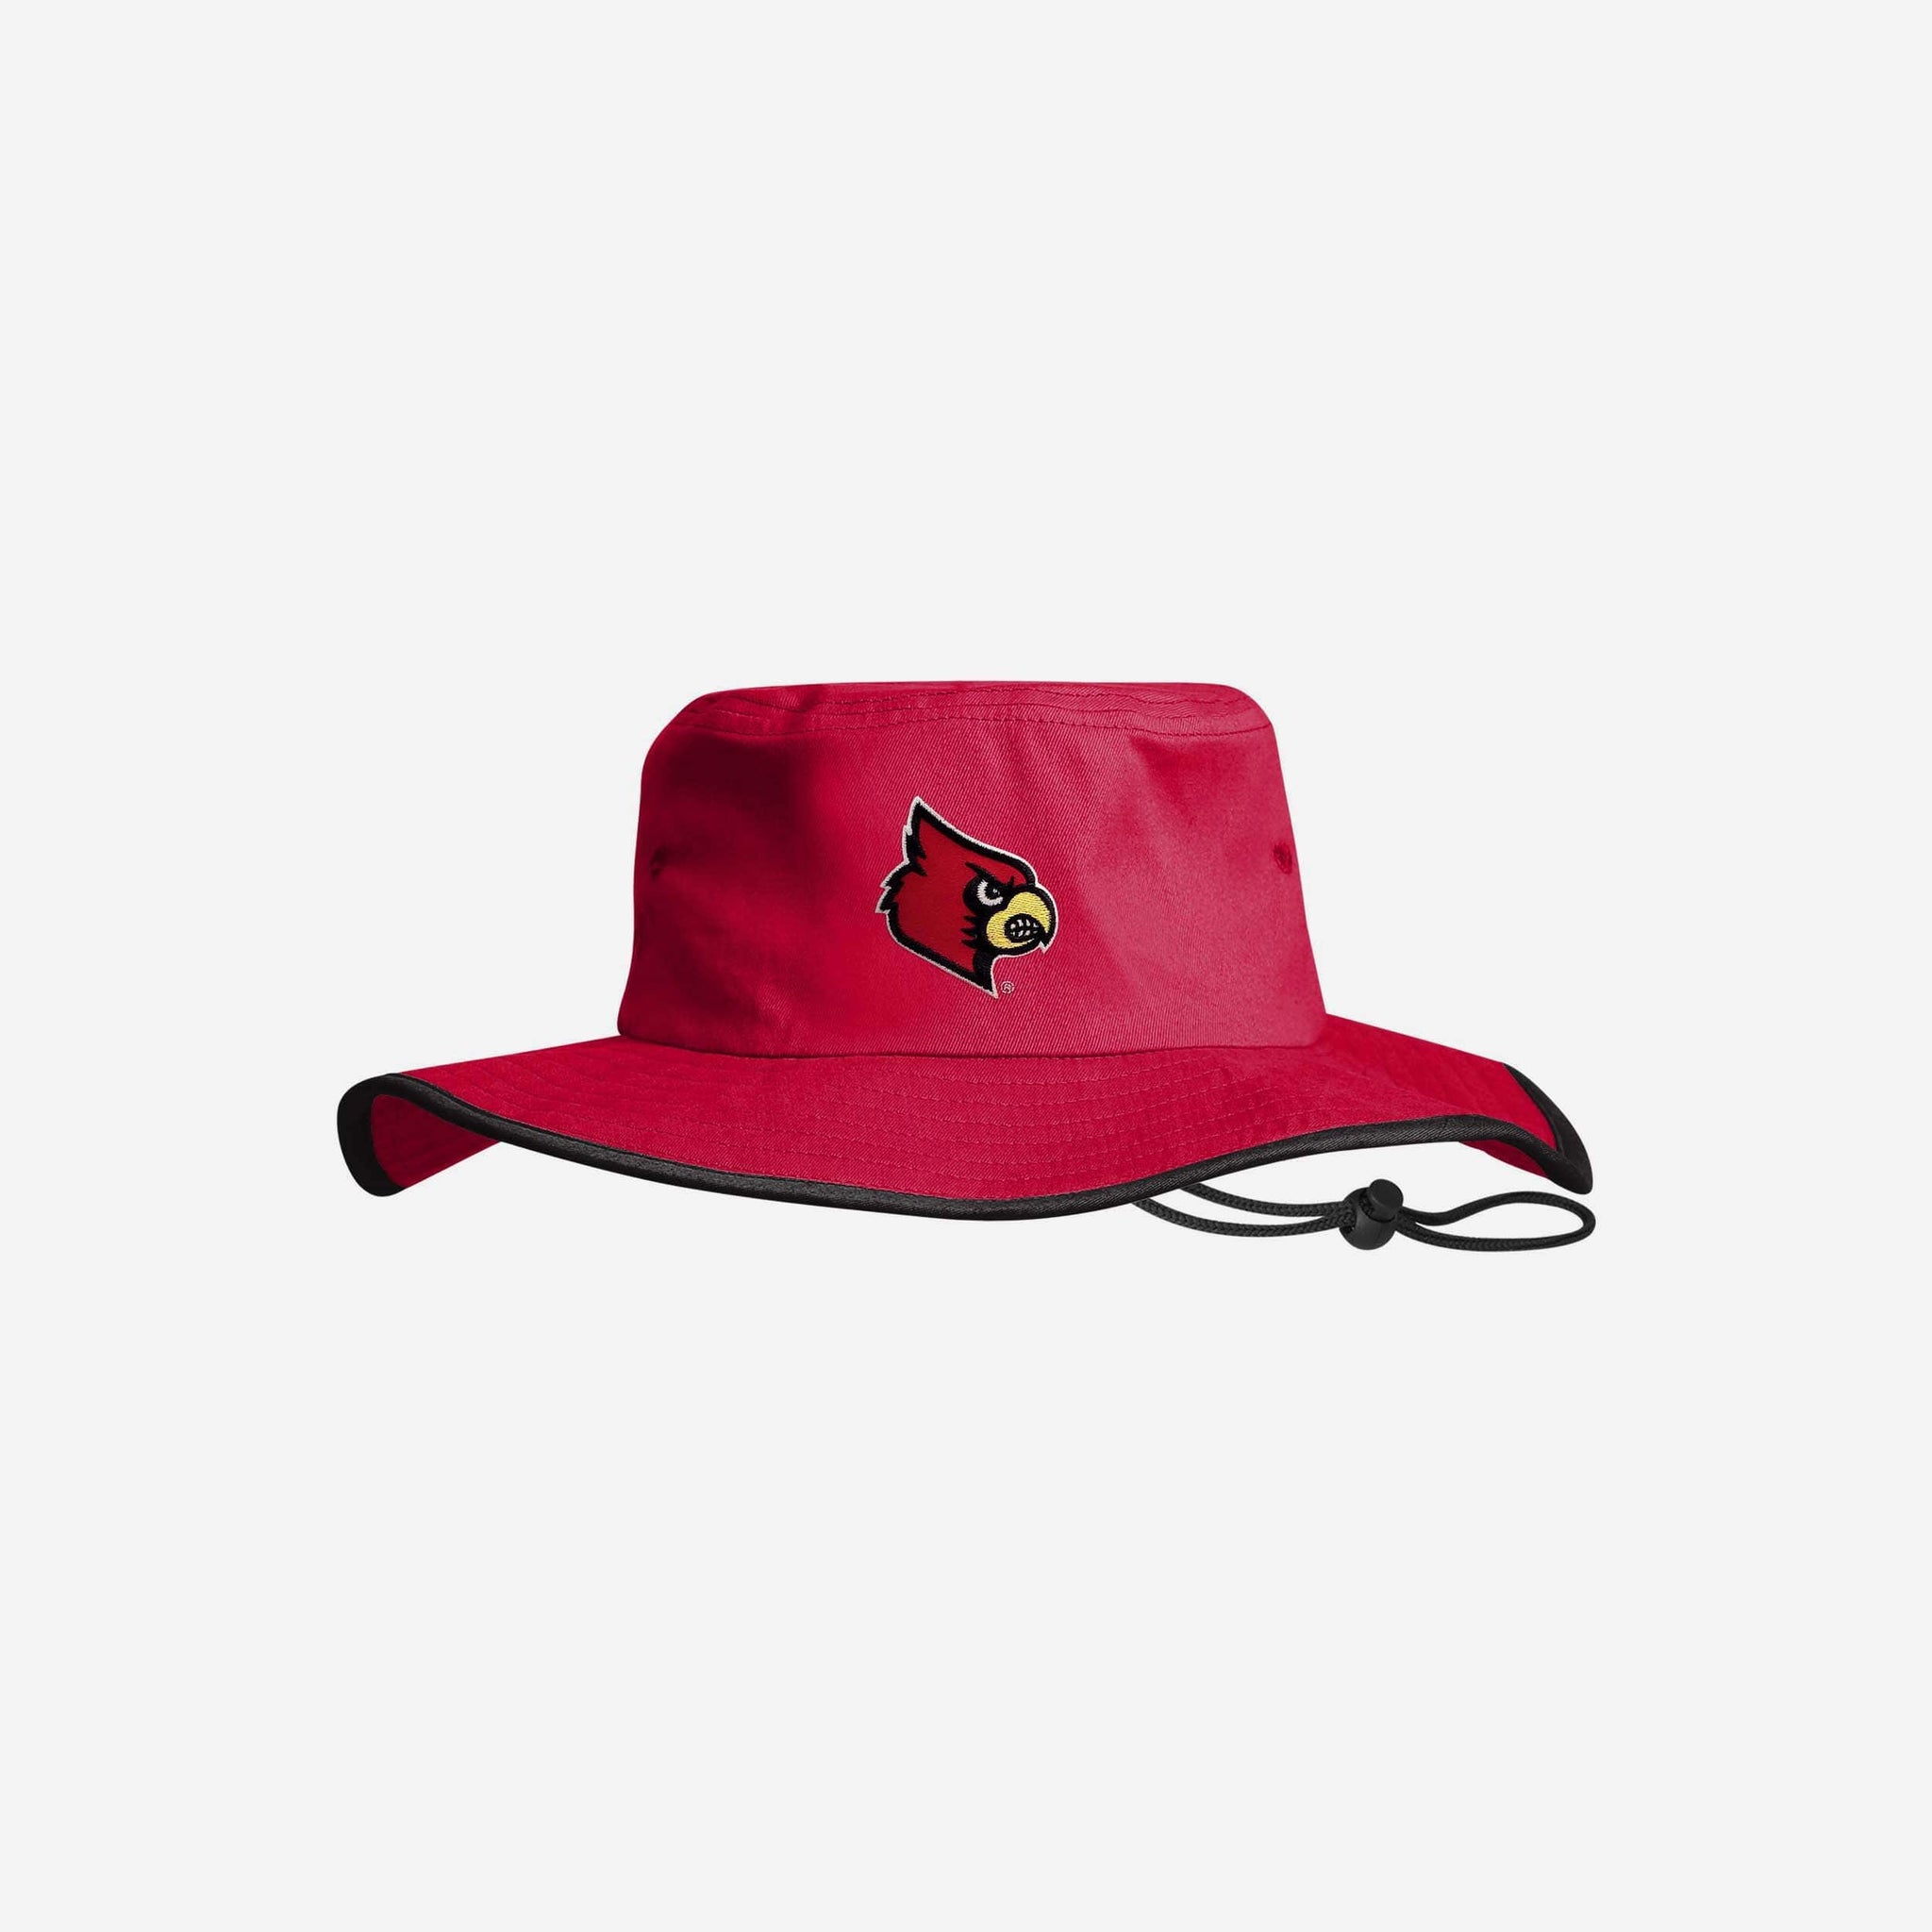 Louisville City Flat Flash Style Snapback Cap (Black/Red)